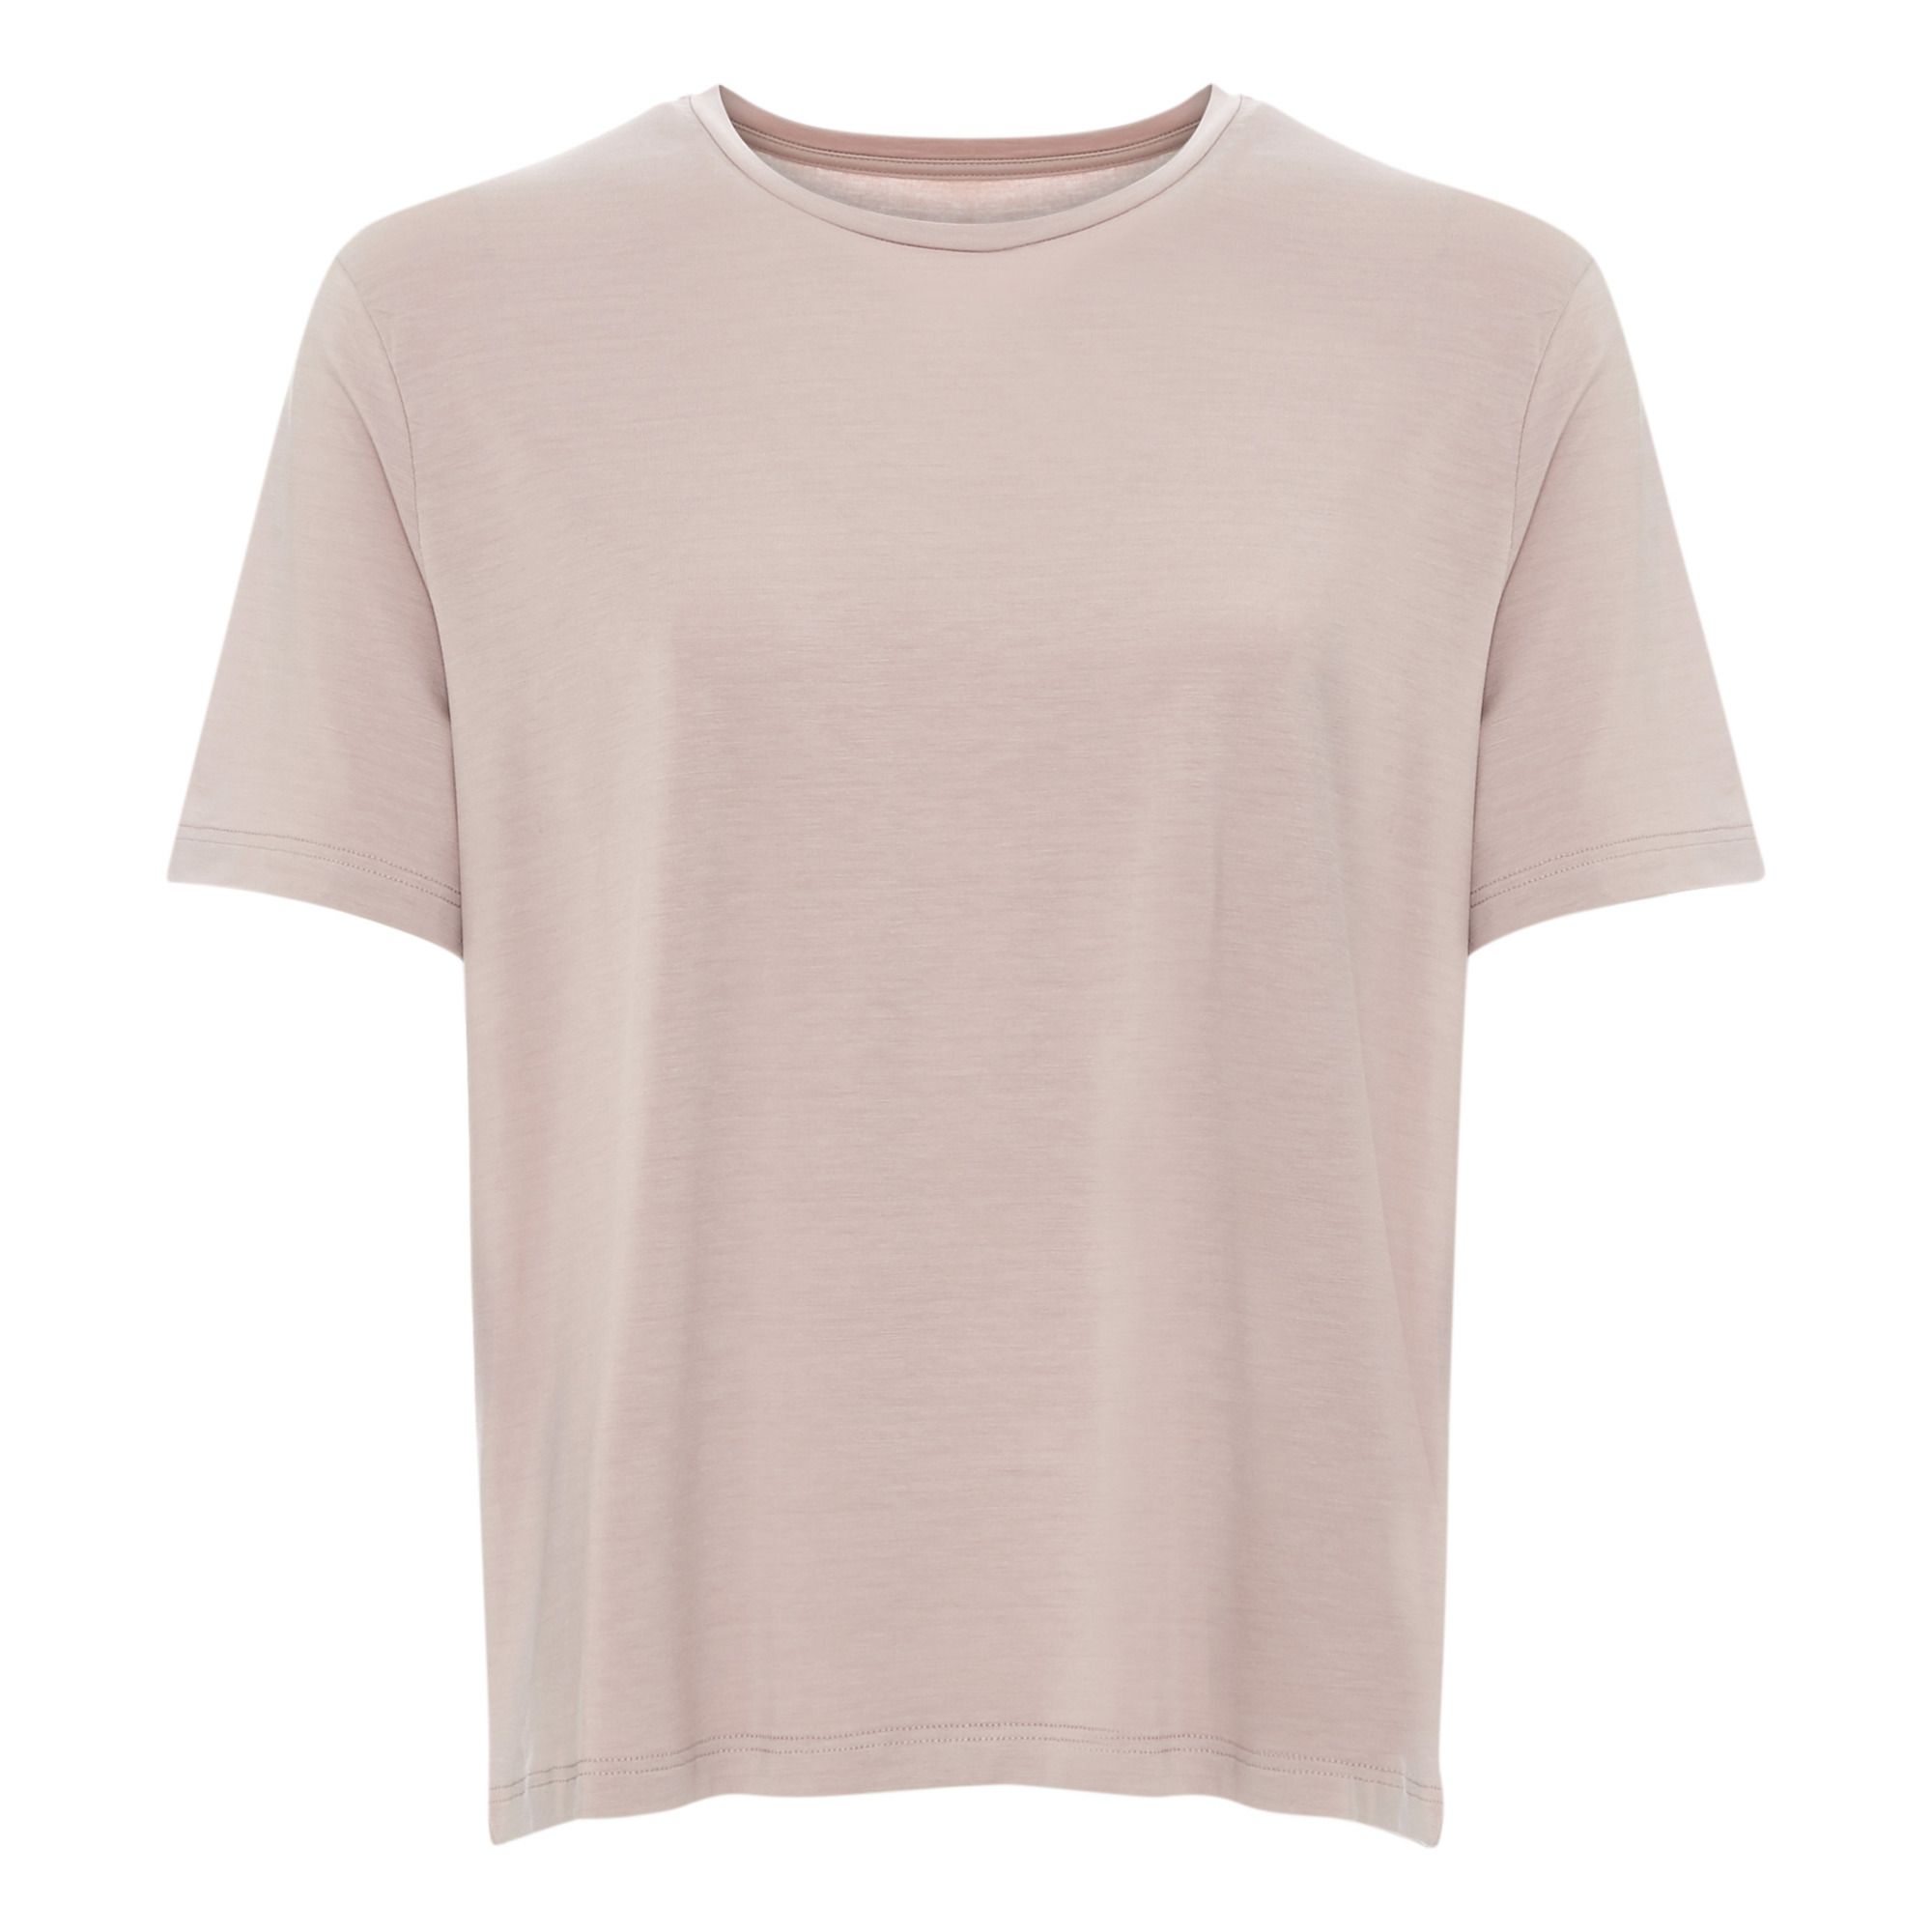 Organic Basics - T-Shirt Tencel Lite - Femme - Vieux Rose